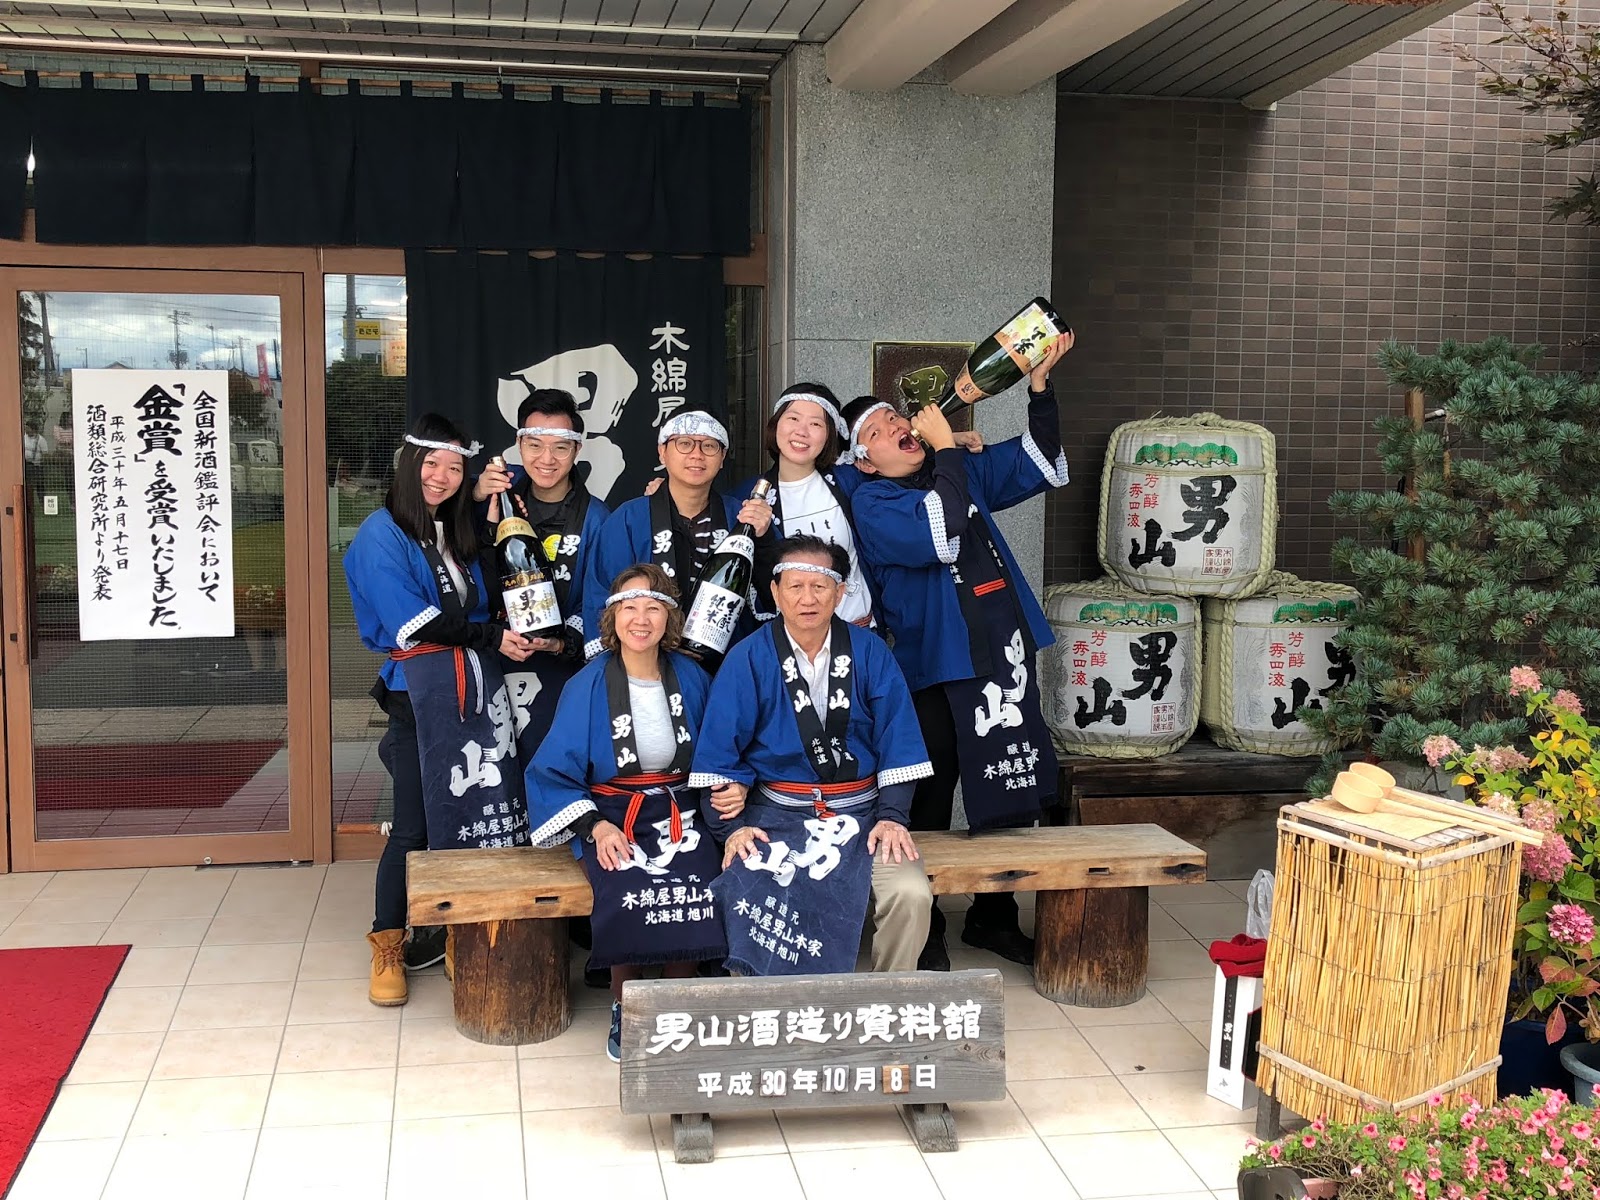 Kết quả hình ảnh cho otokoyama sake museum"